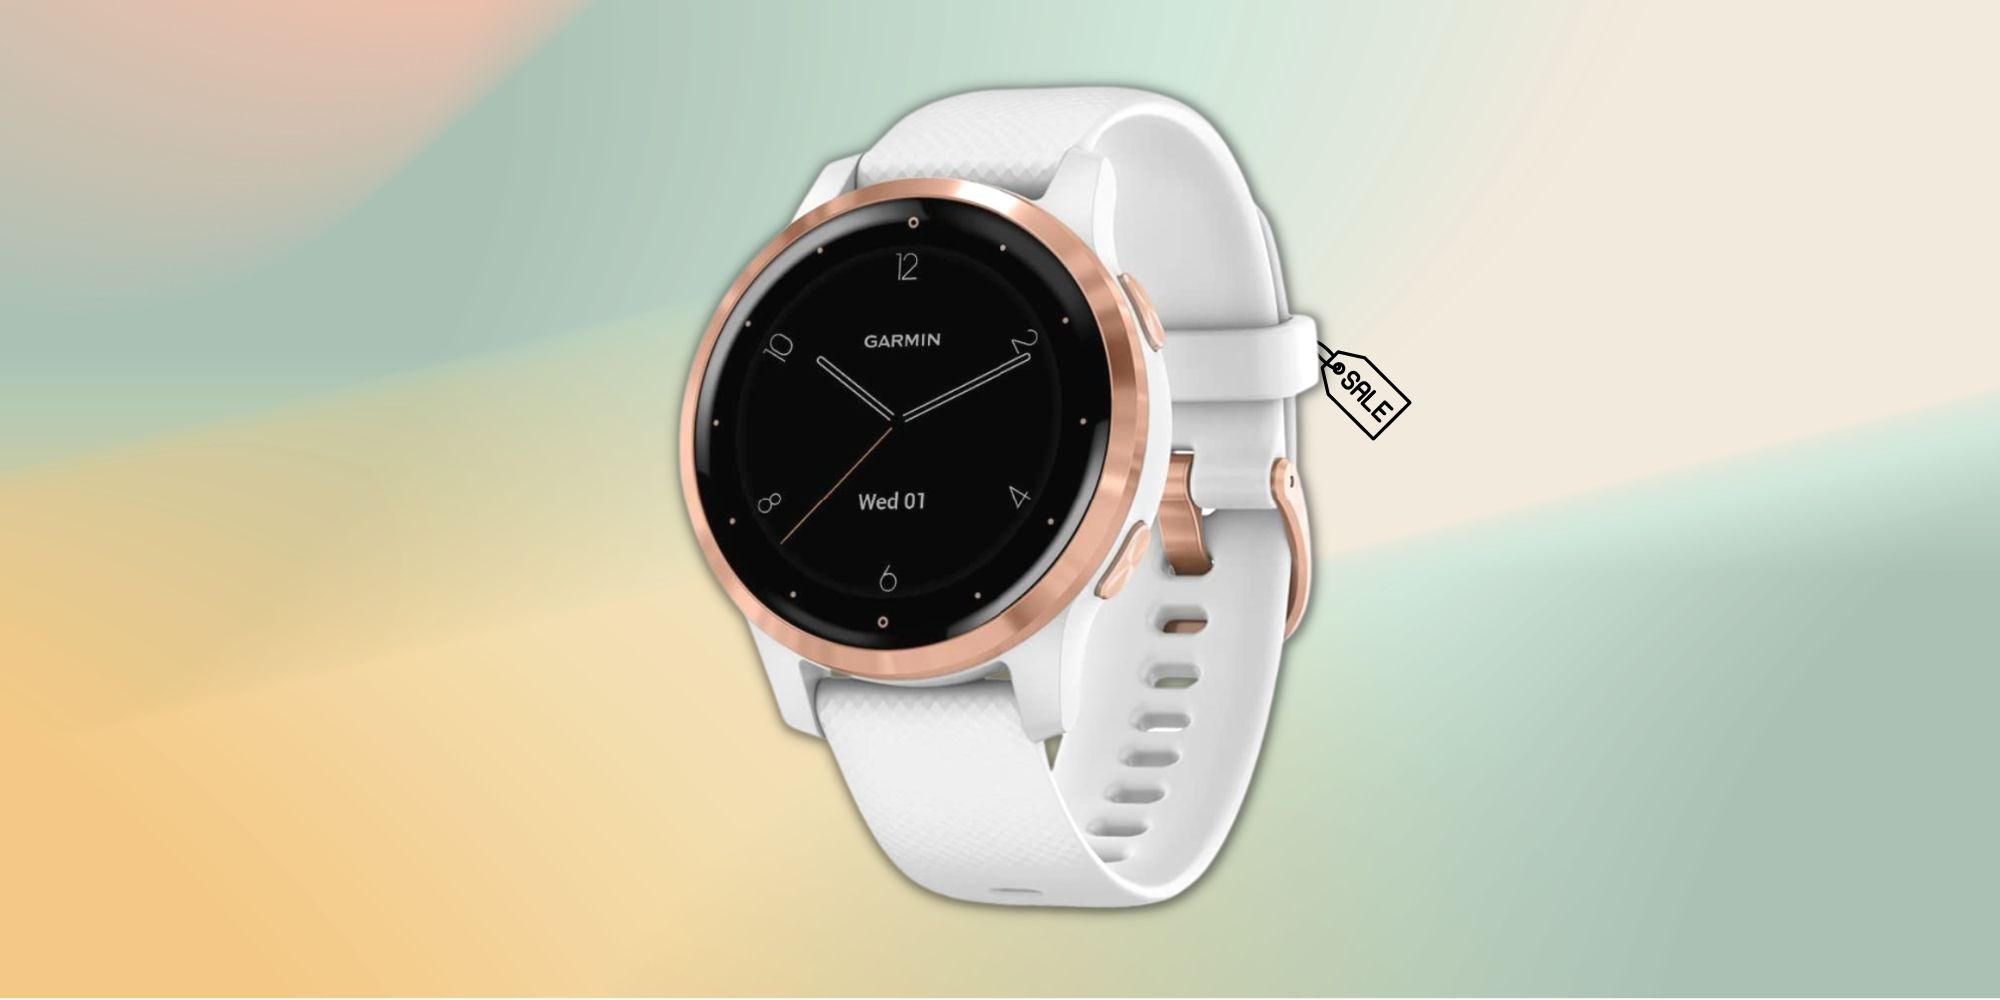 Garmin Vivoactive 4S smartwatch at discounted price on Amazon